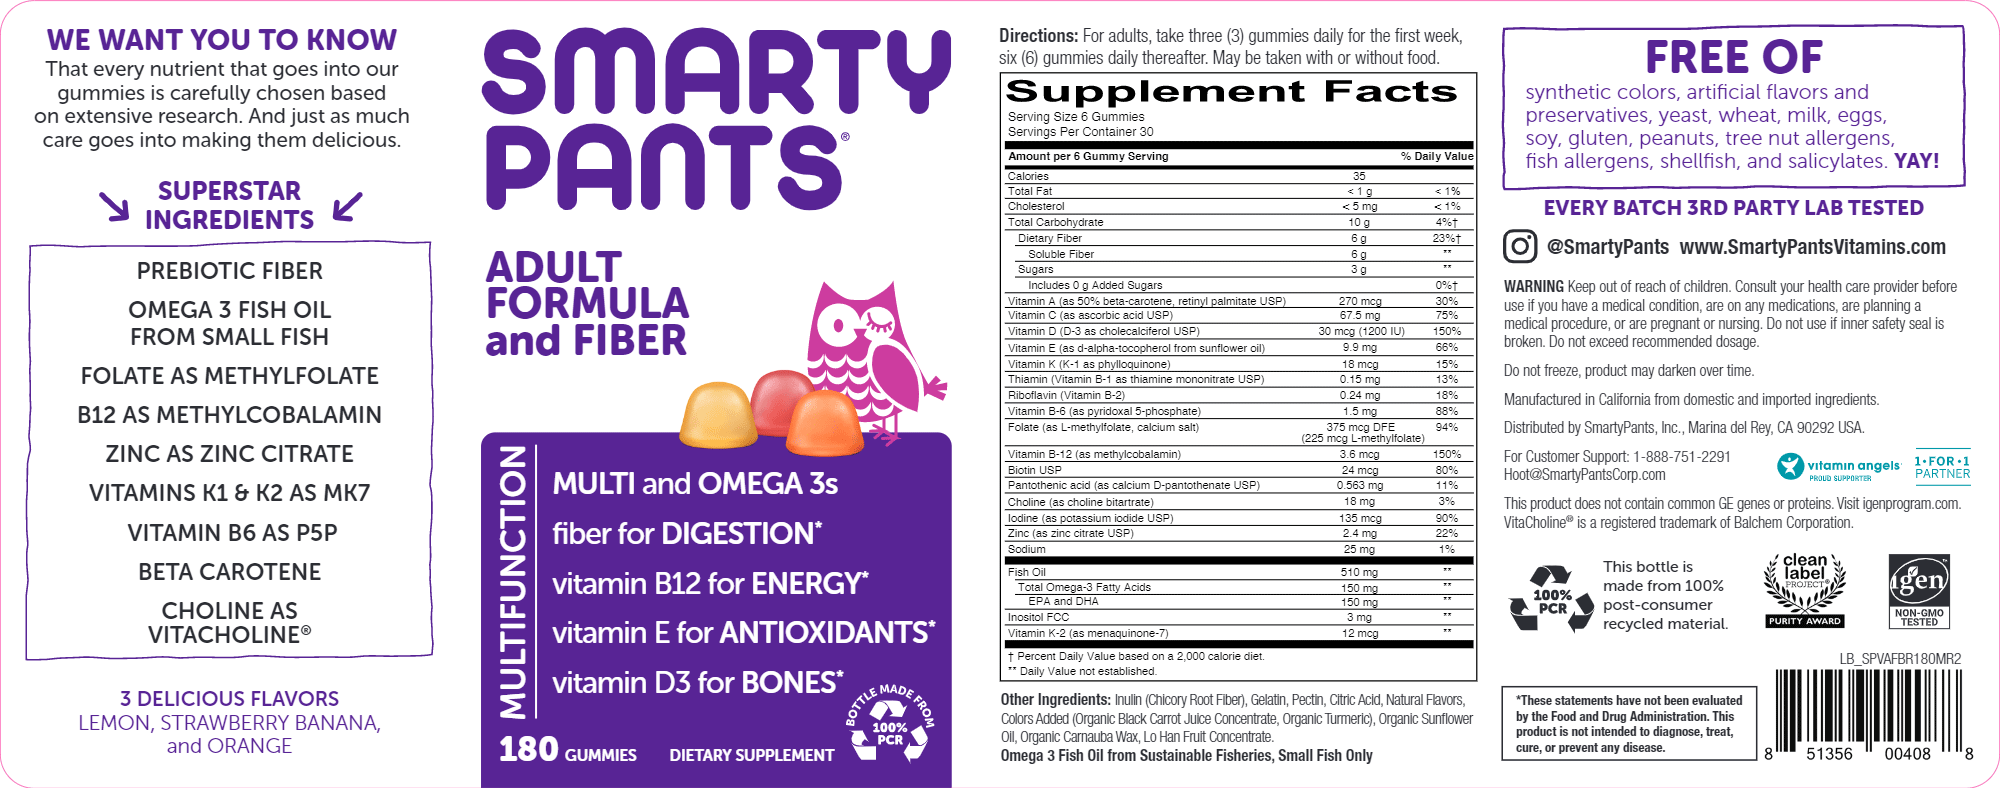 SmartyPants Adult Formula and Fiber Ingredients